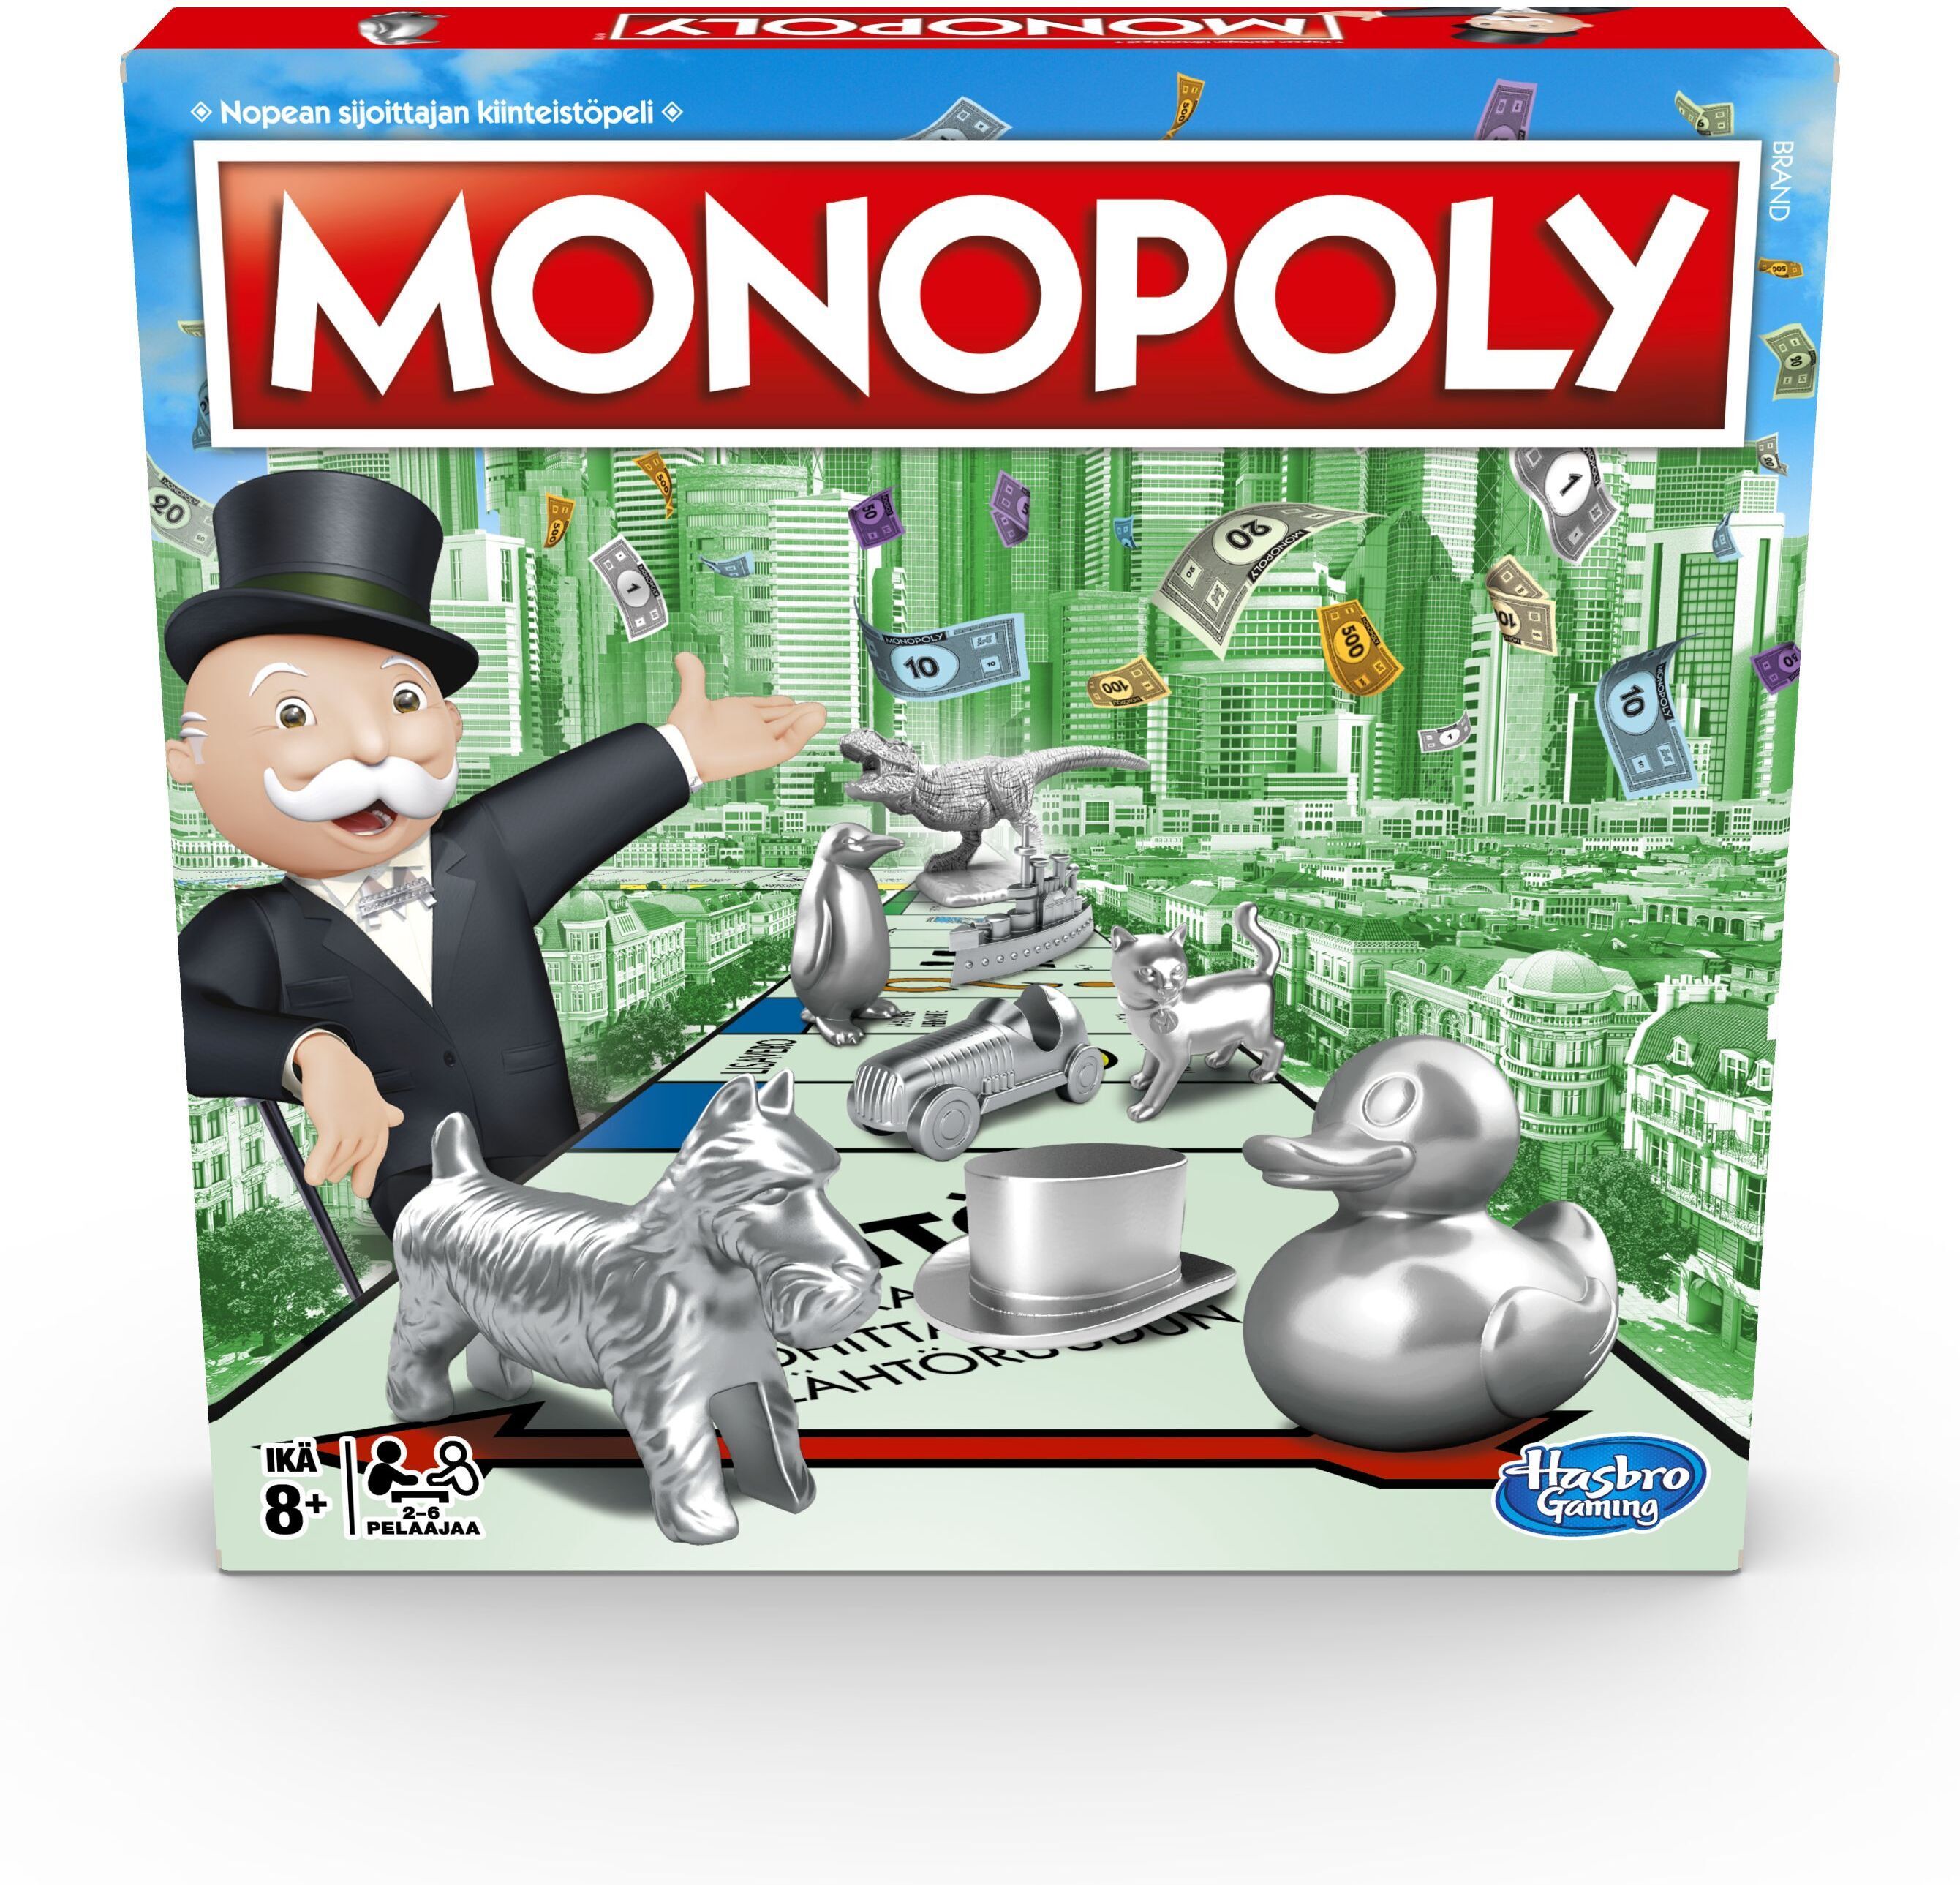 Игра монополия на английском